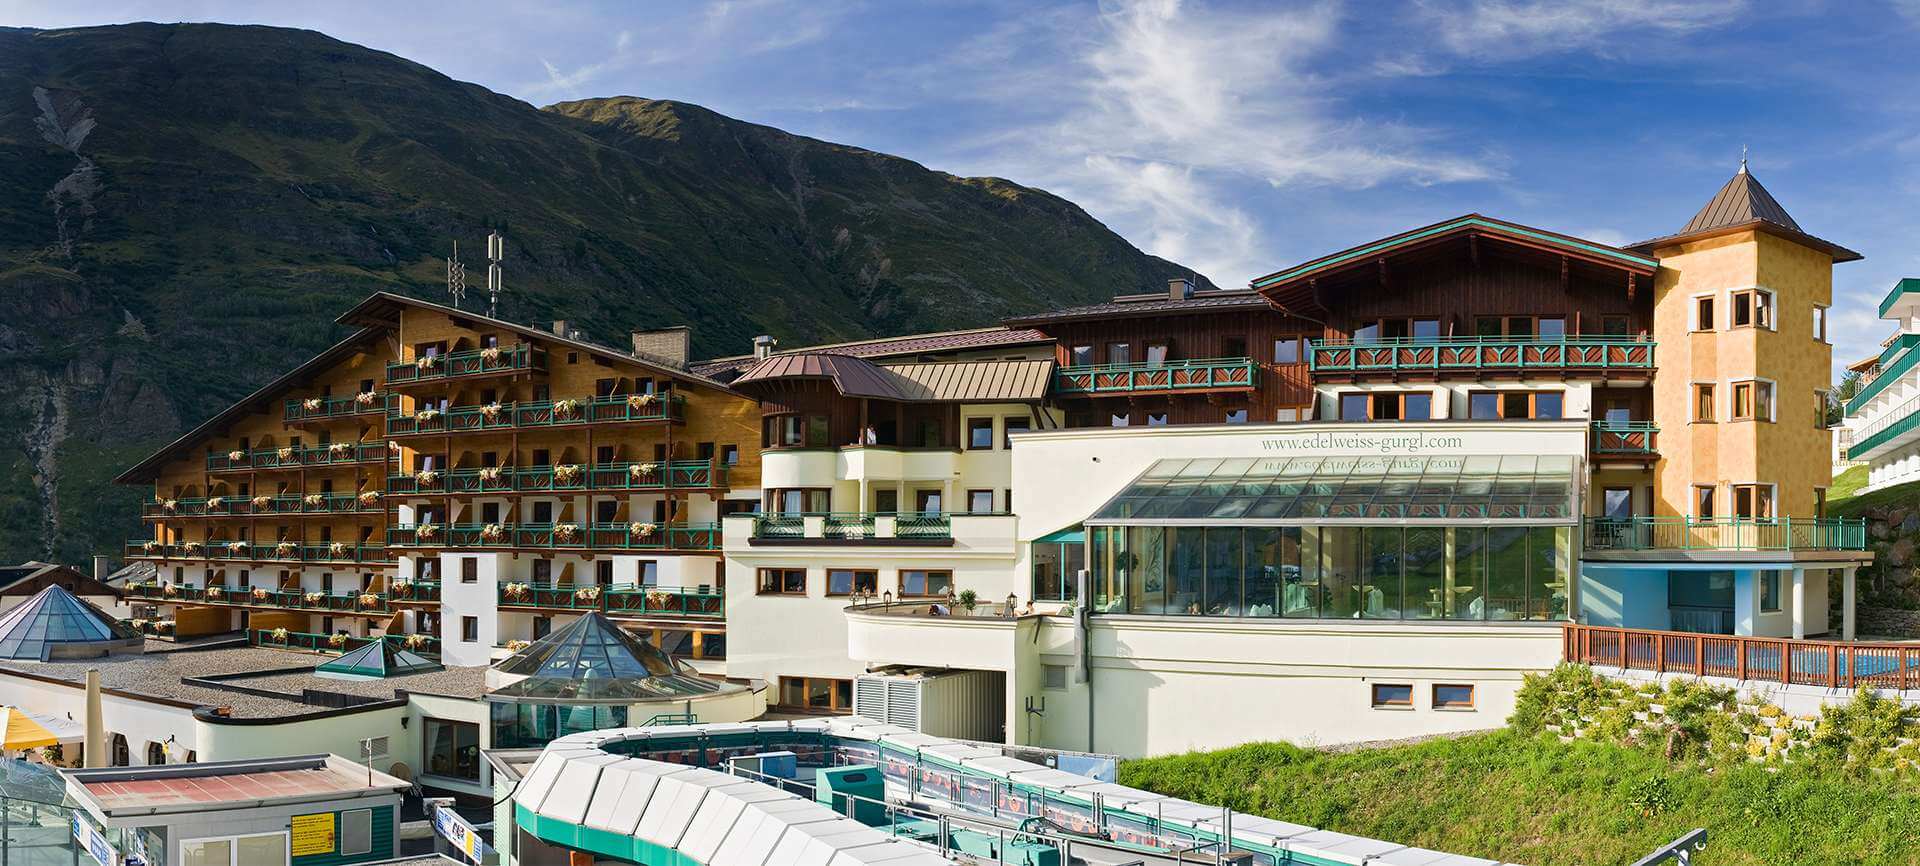 Hotel in den Bergen Tirols, Obergurgl